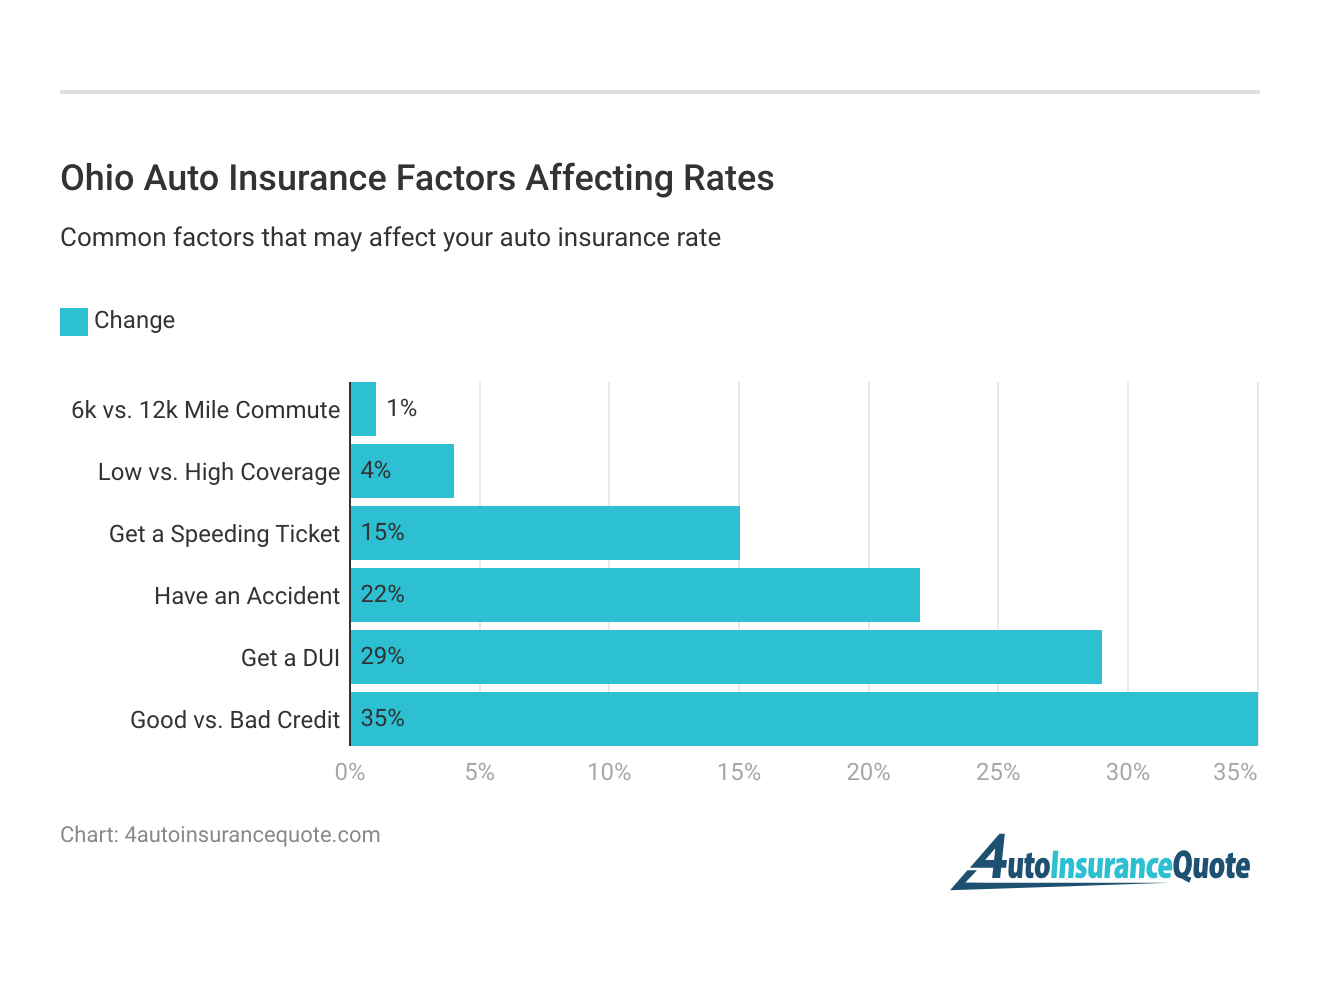 <h3>Ohio Auto Insurance Factors Affecting Rates</h3>